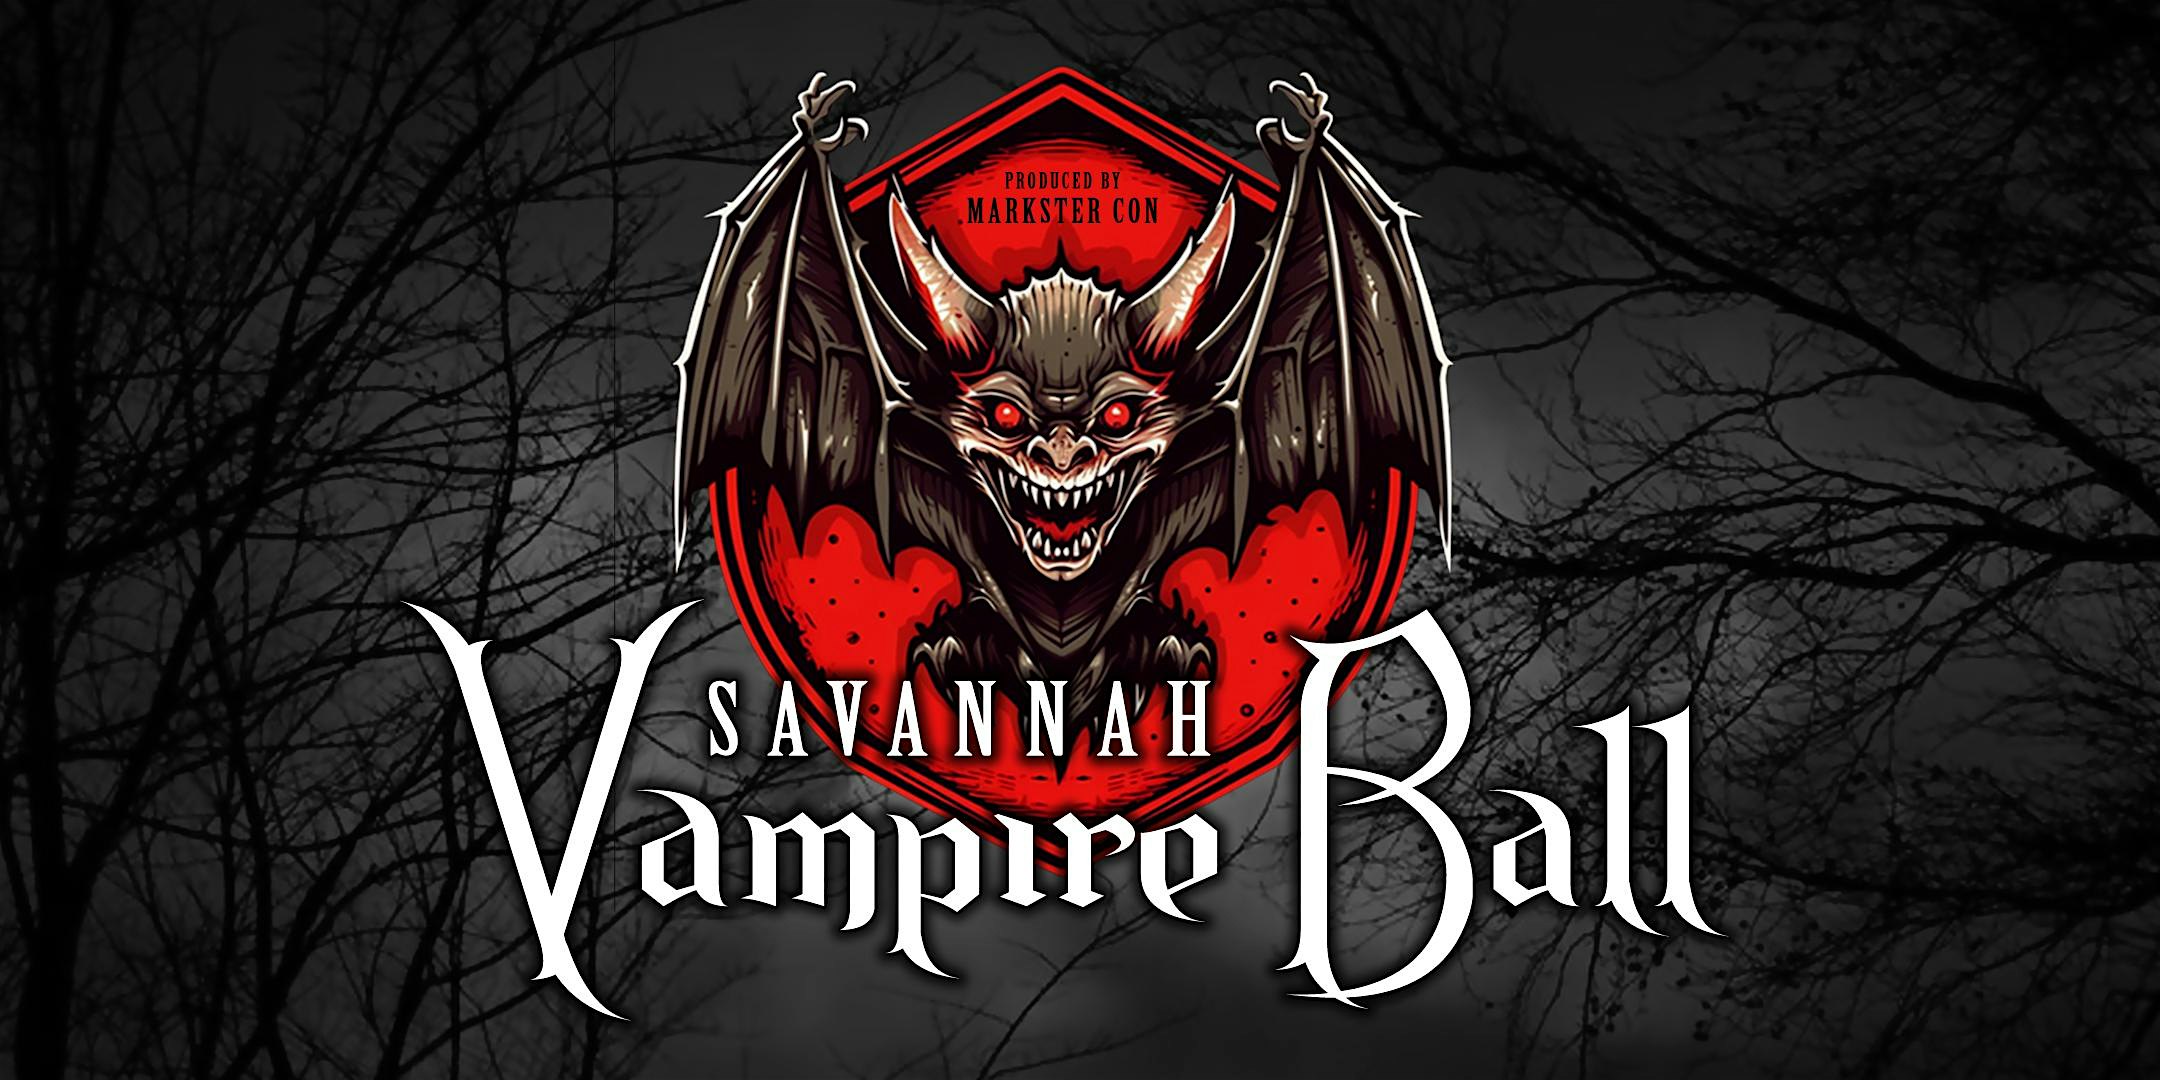 Vampire Ball V (Savannah, GA)